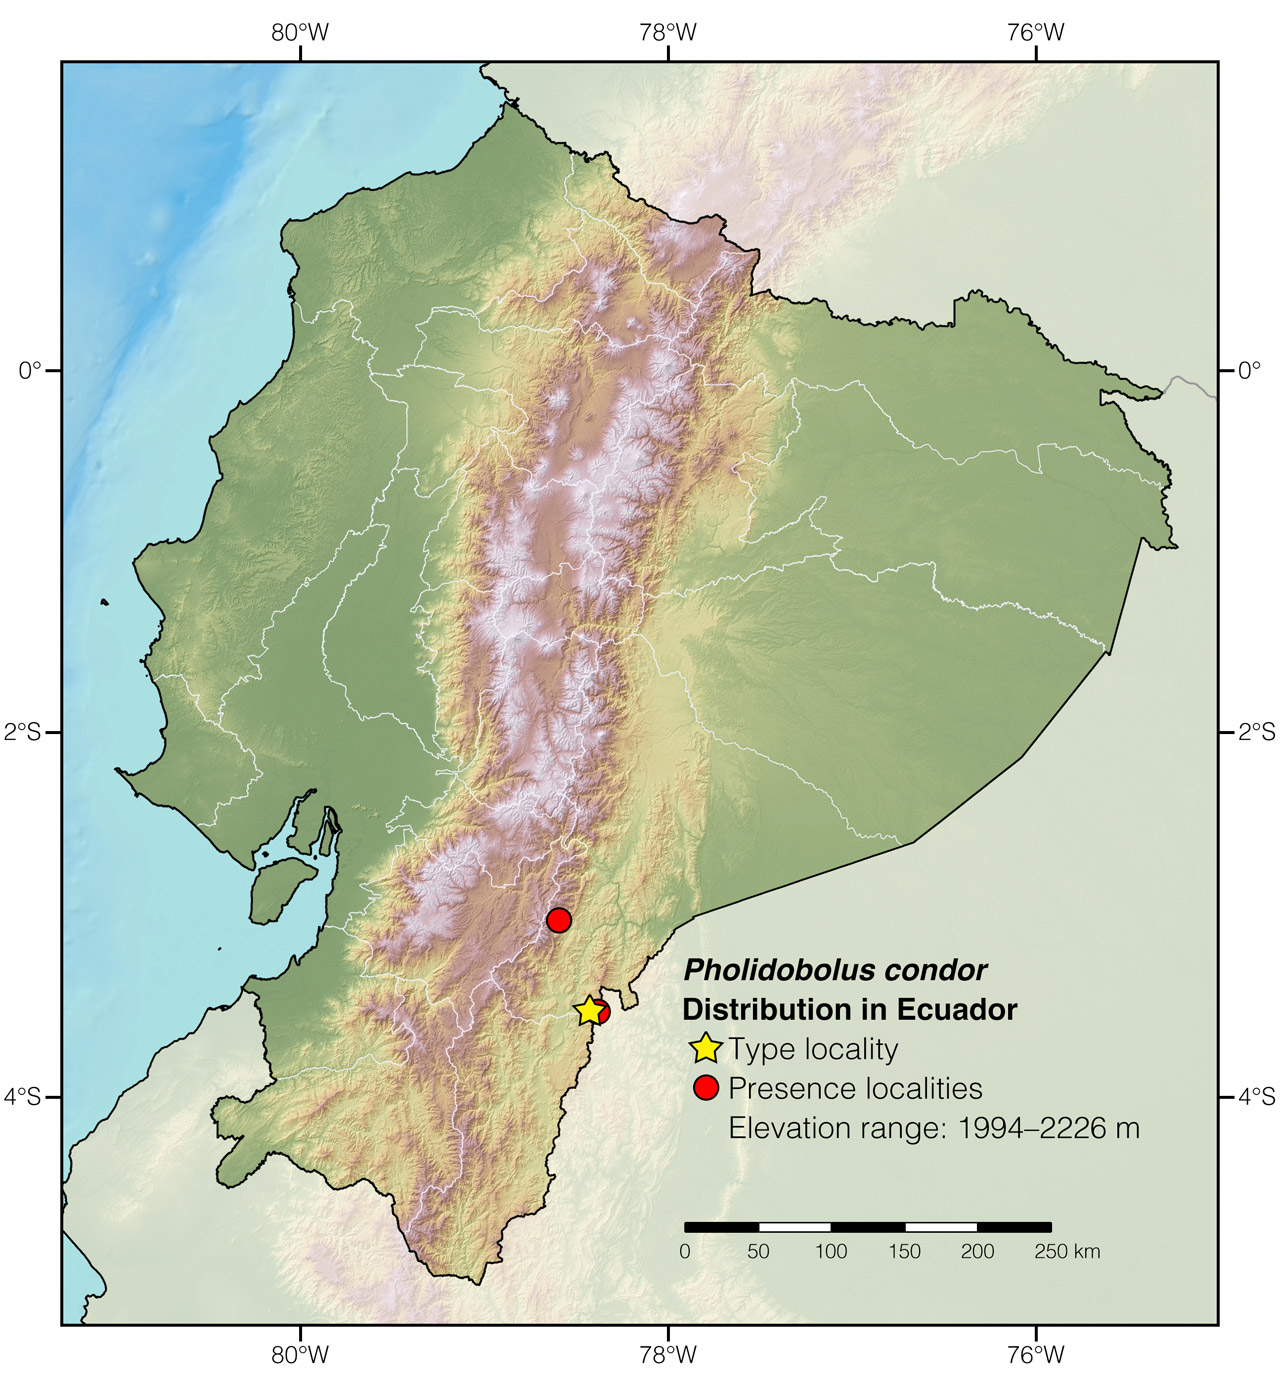 Distribution of Pholidobolus condor in Ecuador